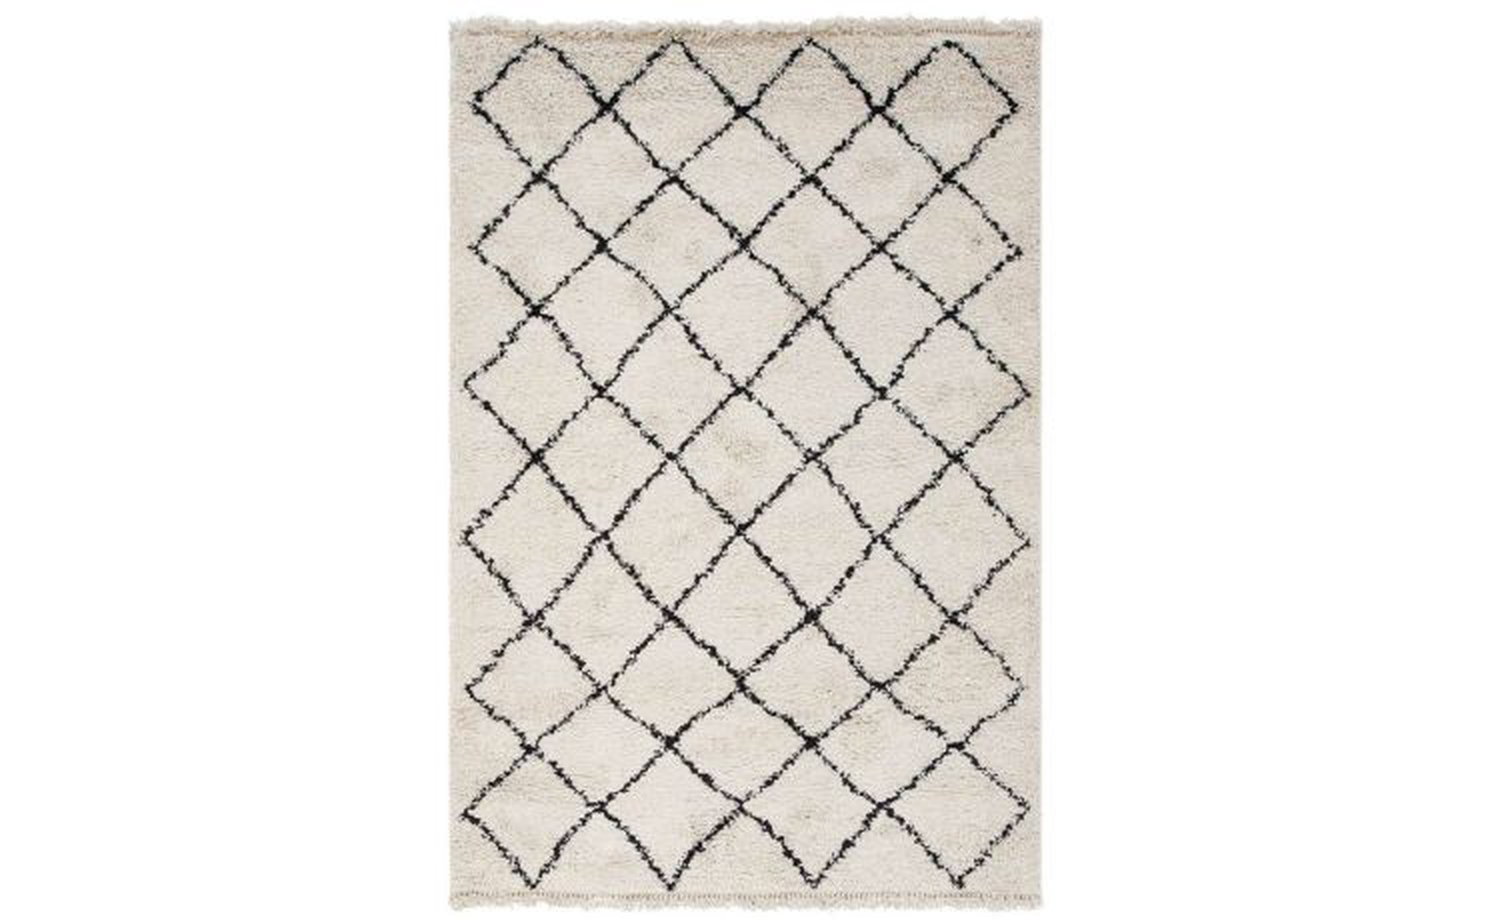 Tribe A tappeto bianco motivo a rombi 160x230 cm